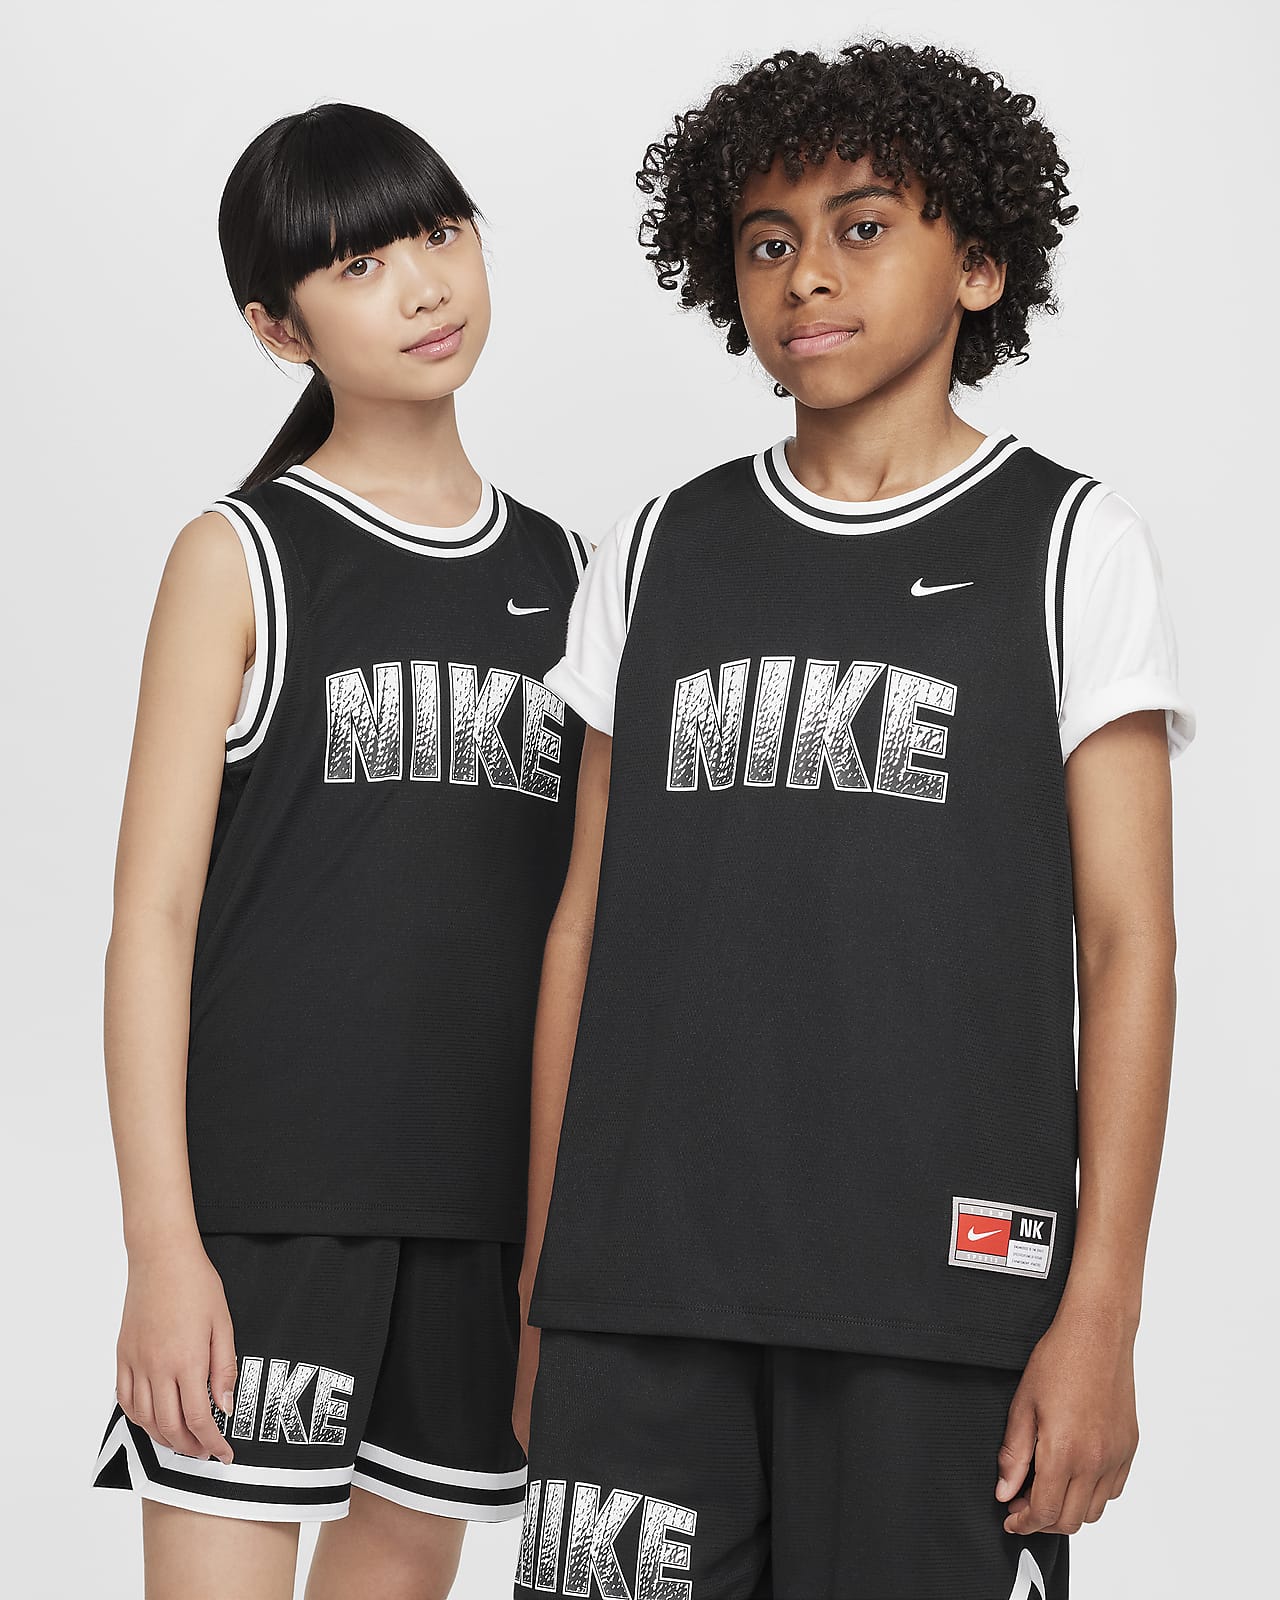 Nike Culture of Basketball Basketballtrikot (ältere Kinder)